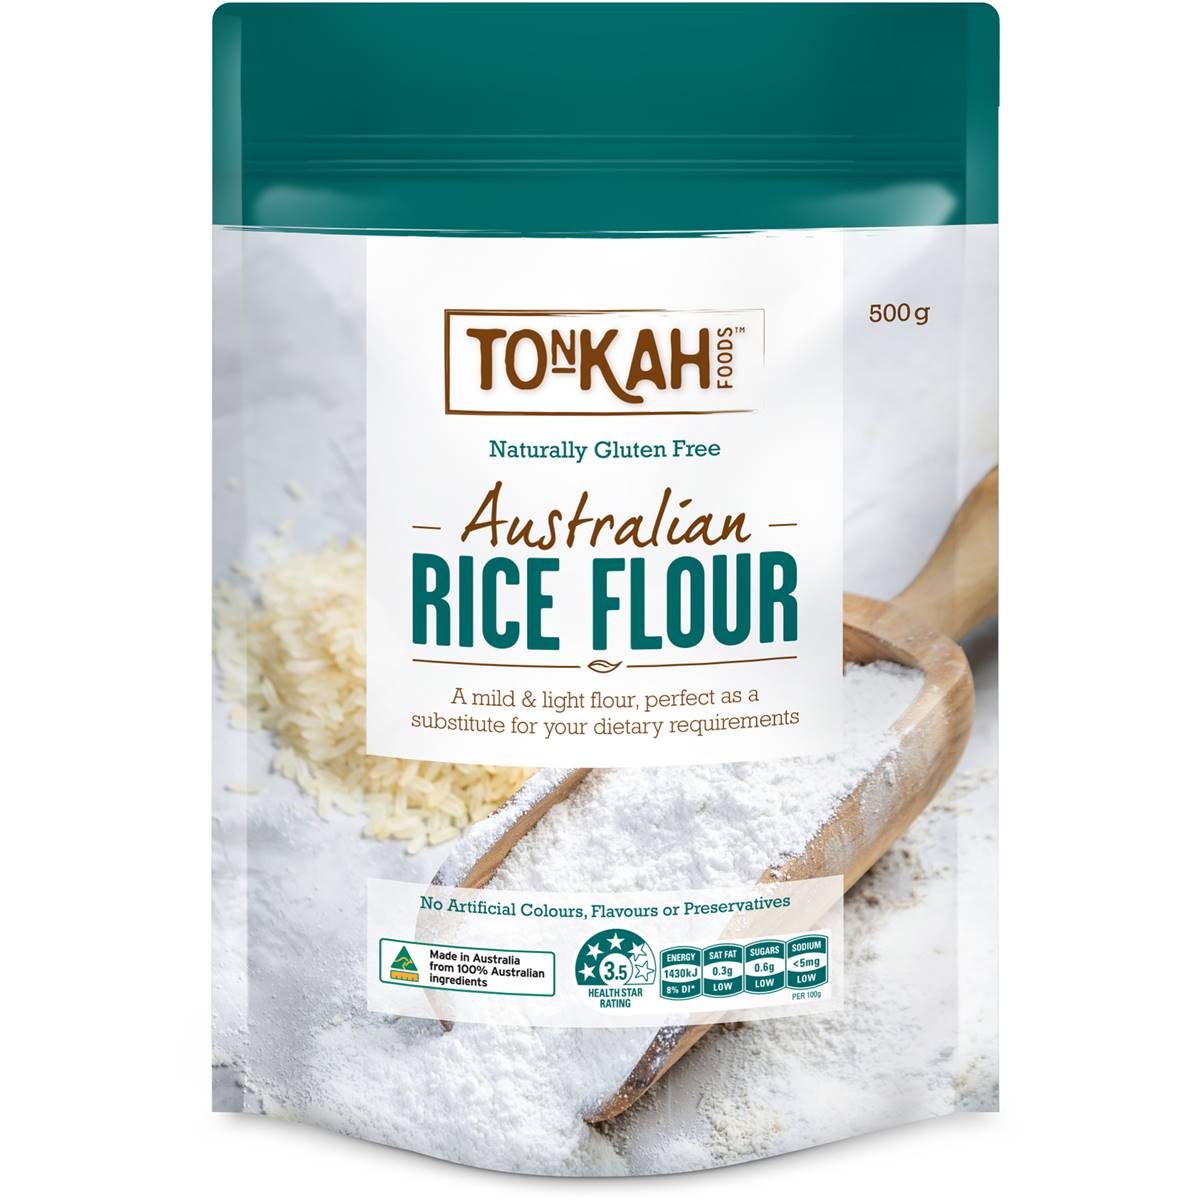 Calories in Tonkah Australian Rice Flour